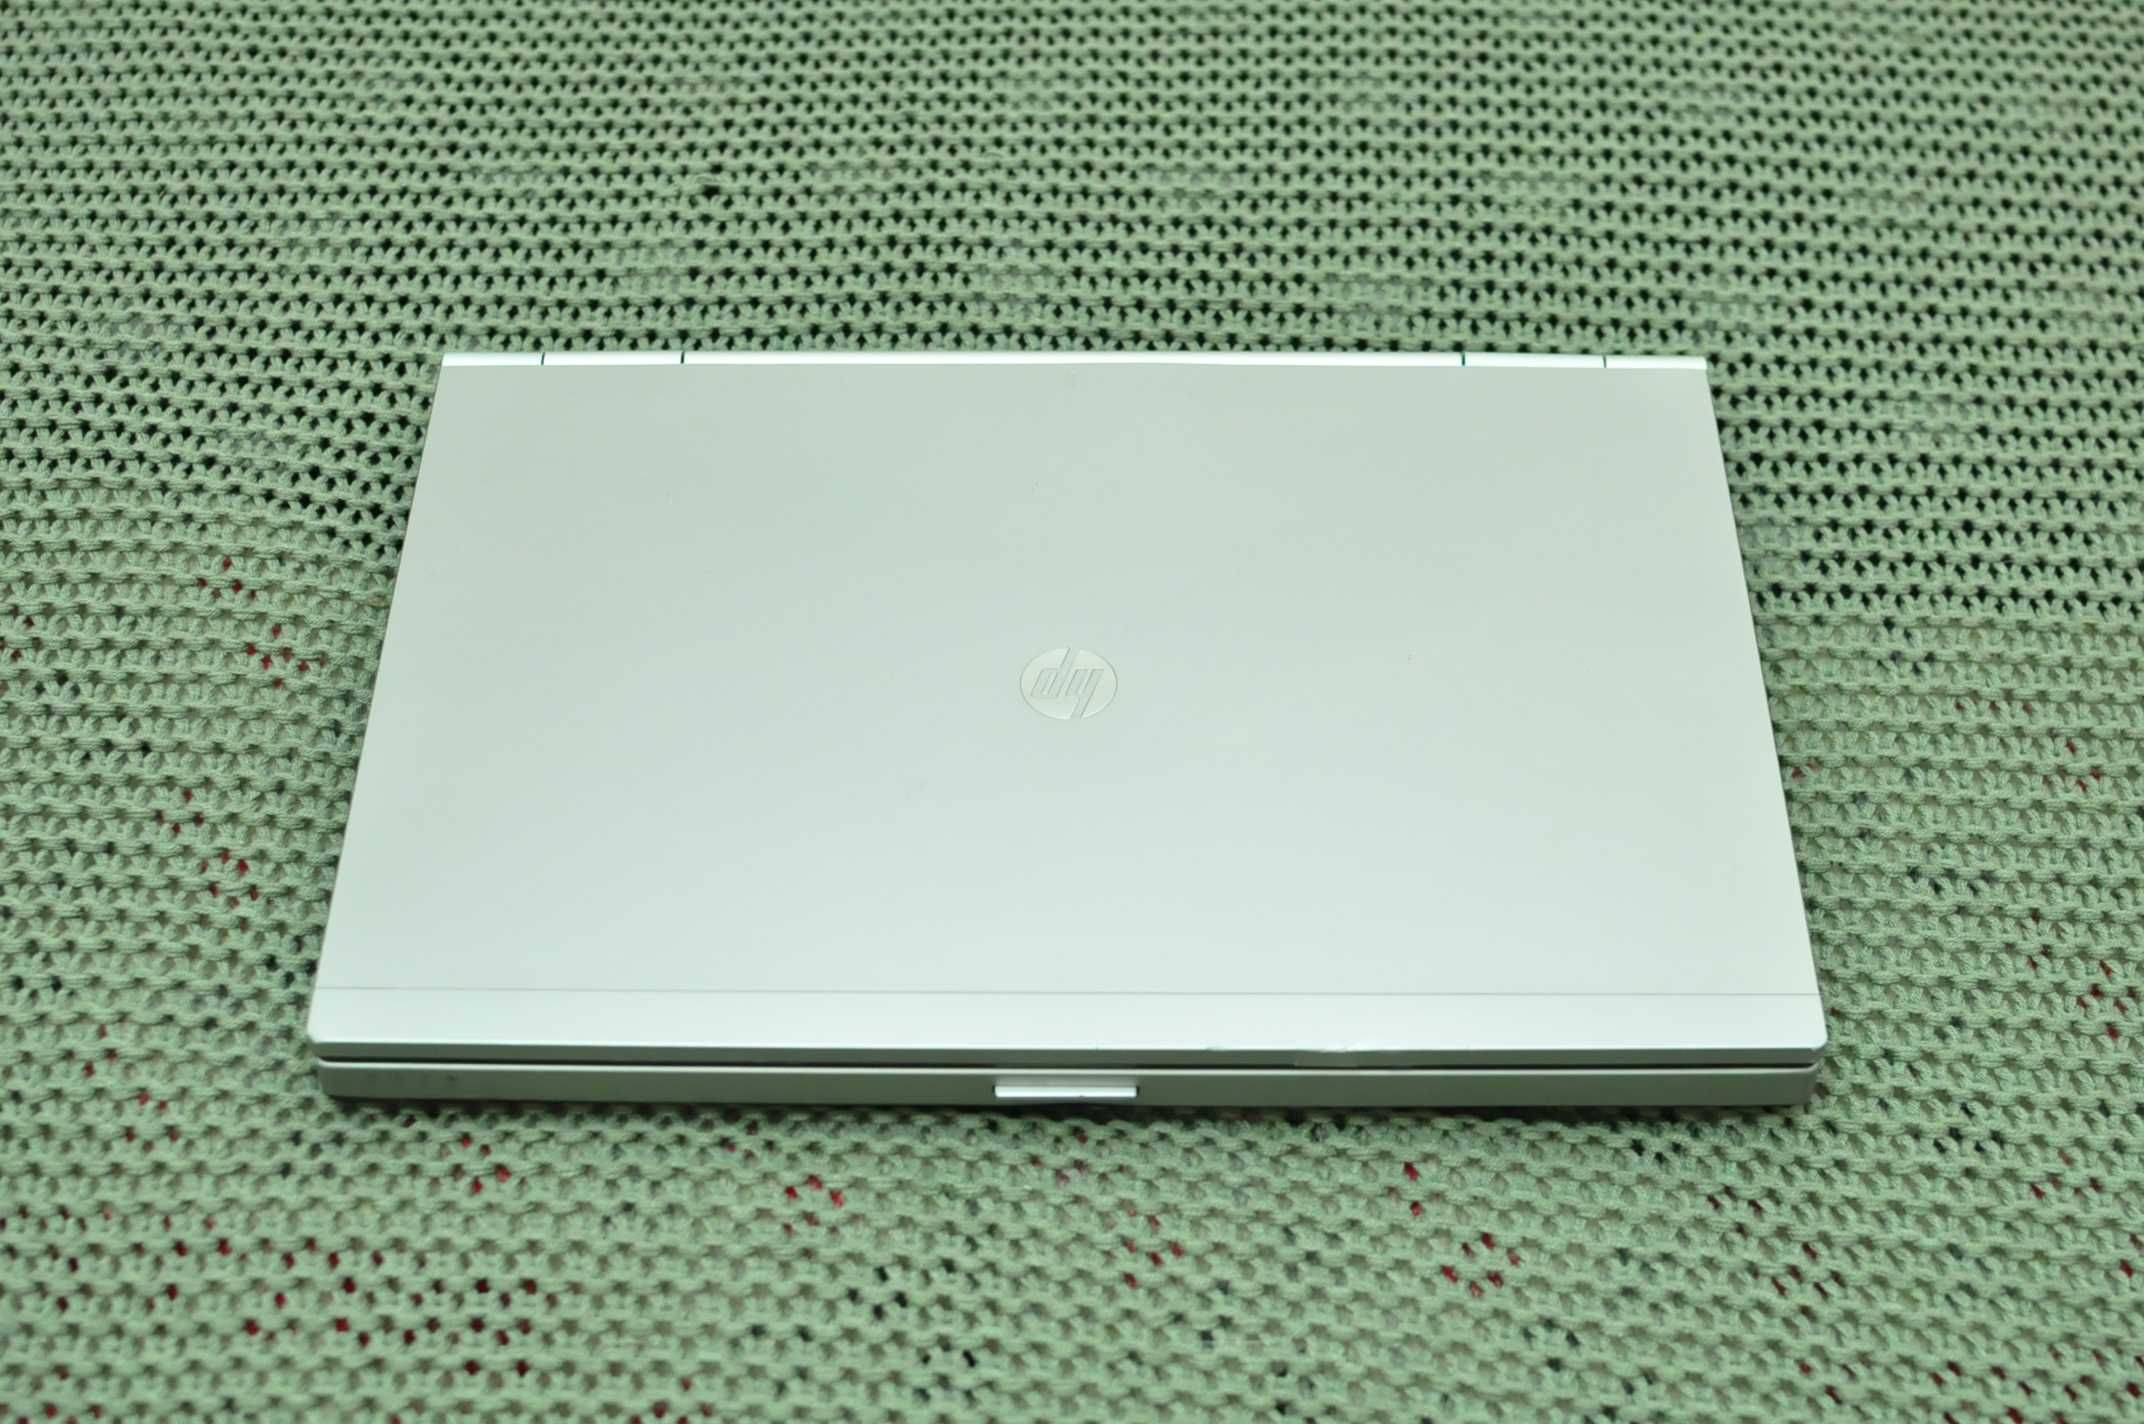 Игровой ноутбук HP 8460 (Core i7/8Gb/SSD 240Gb/video 2Gb)